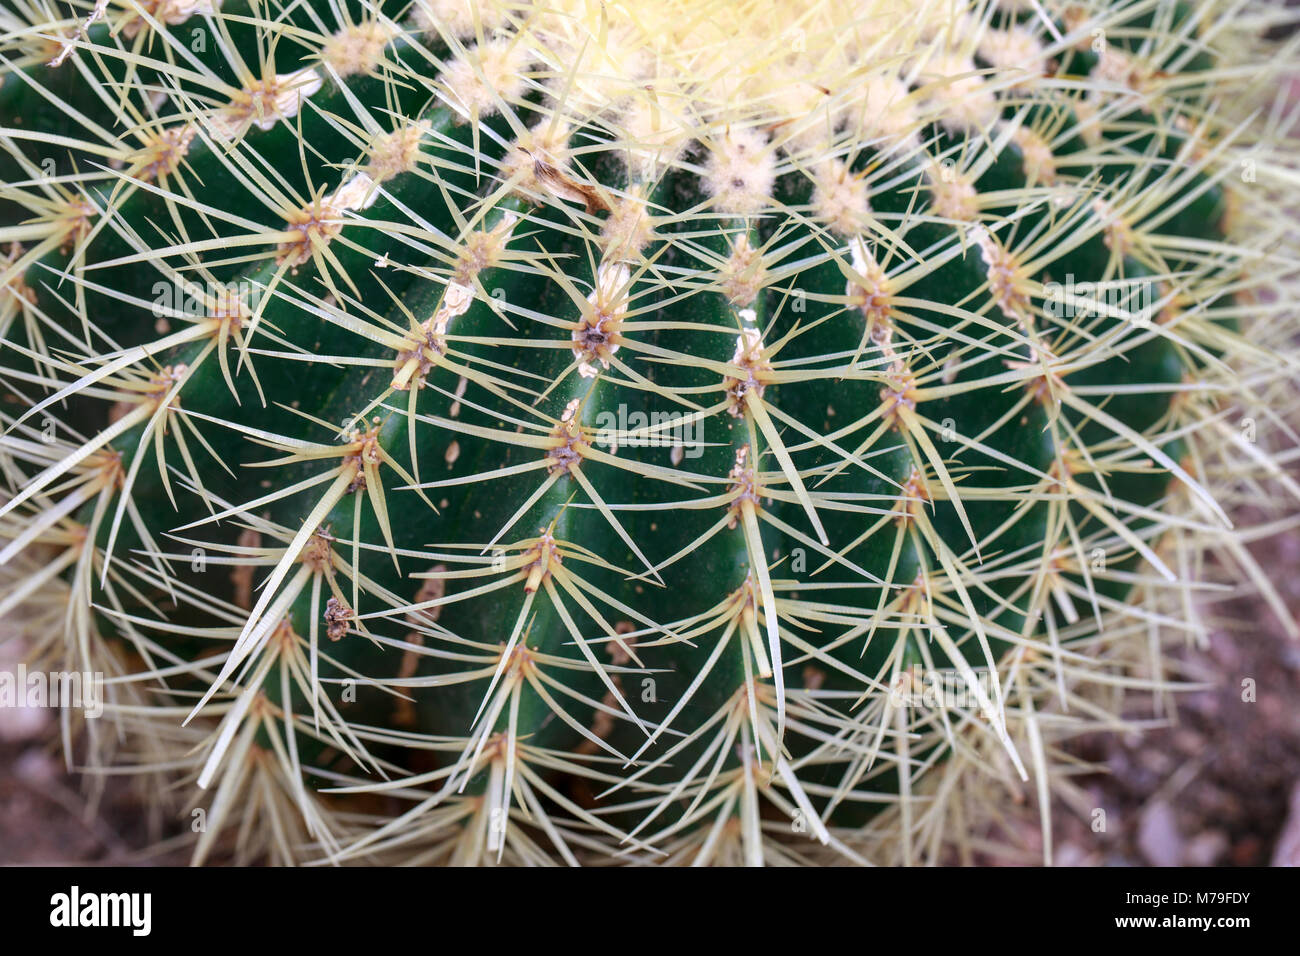 Golden Barrel Kaktus (Mexiko), eine Gattung der Kakteen aus Mexiko. Stockfoto